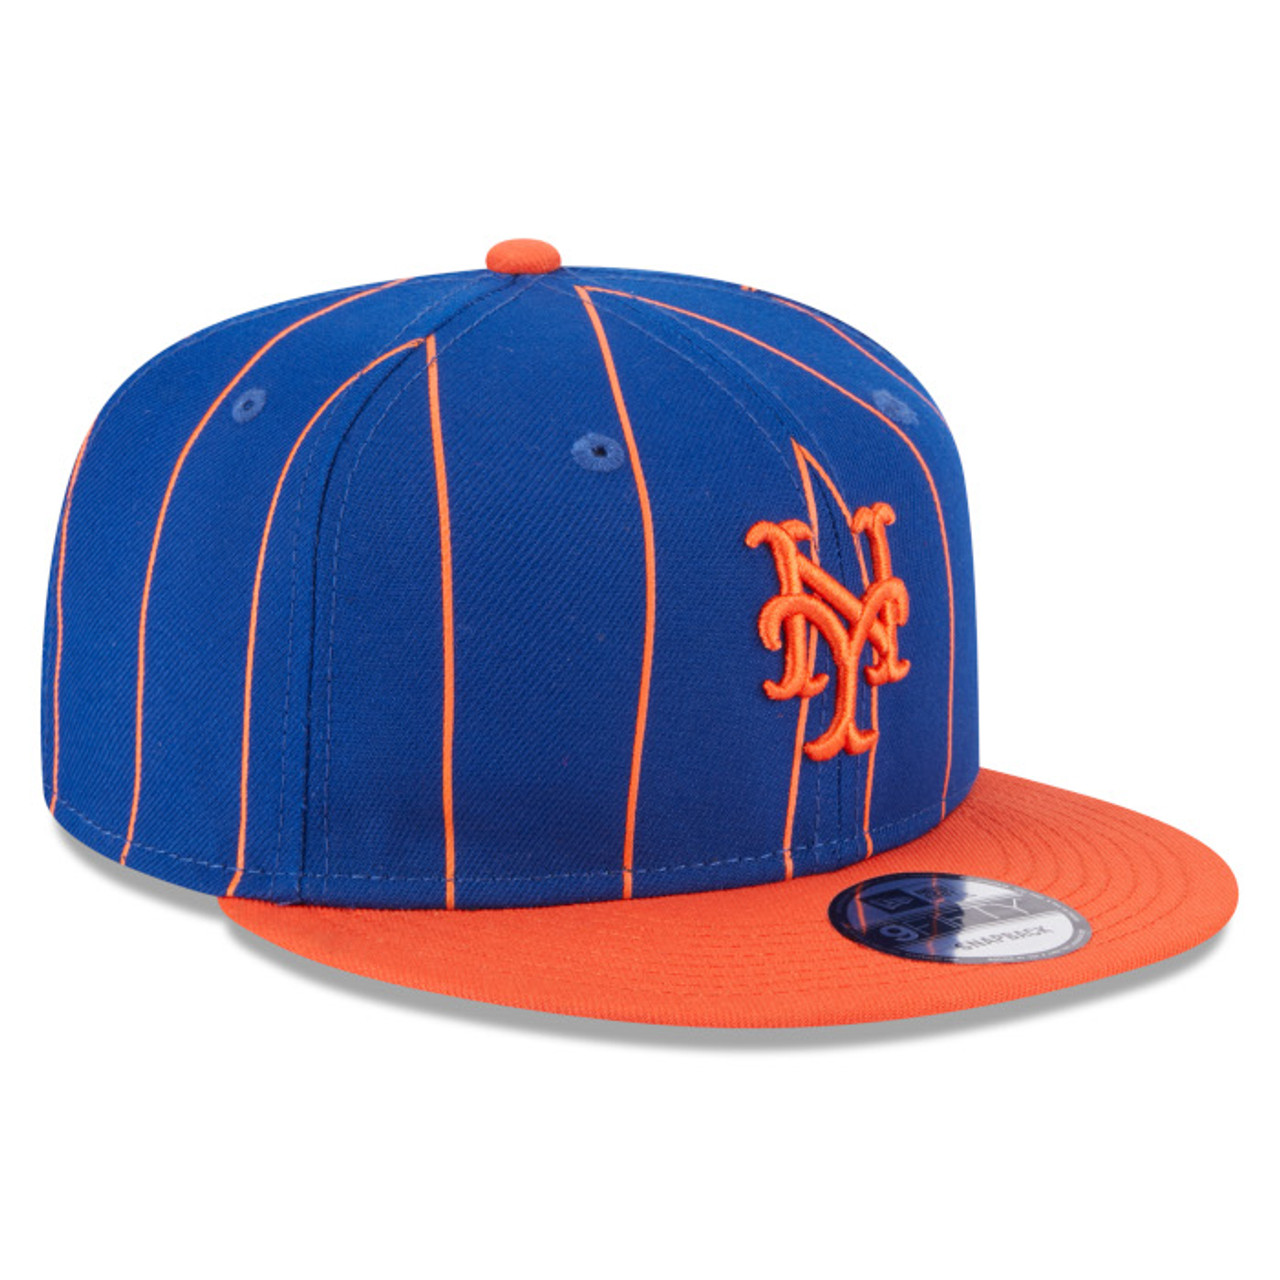  New Era 9Fifty MLB New York Mets Basic Royal Blue